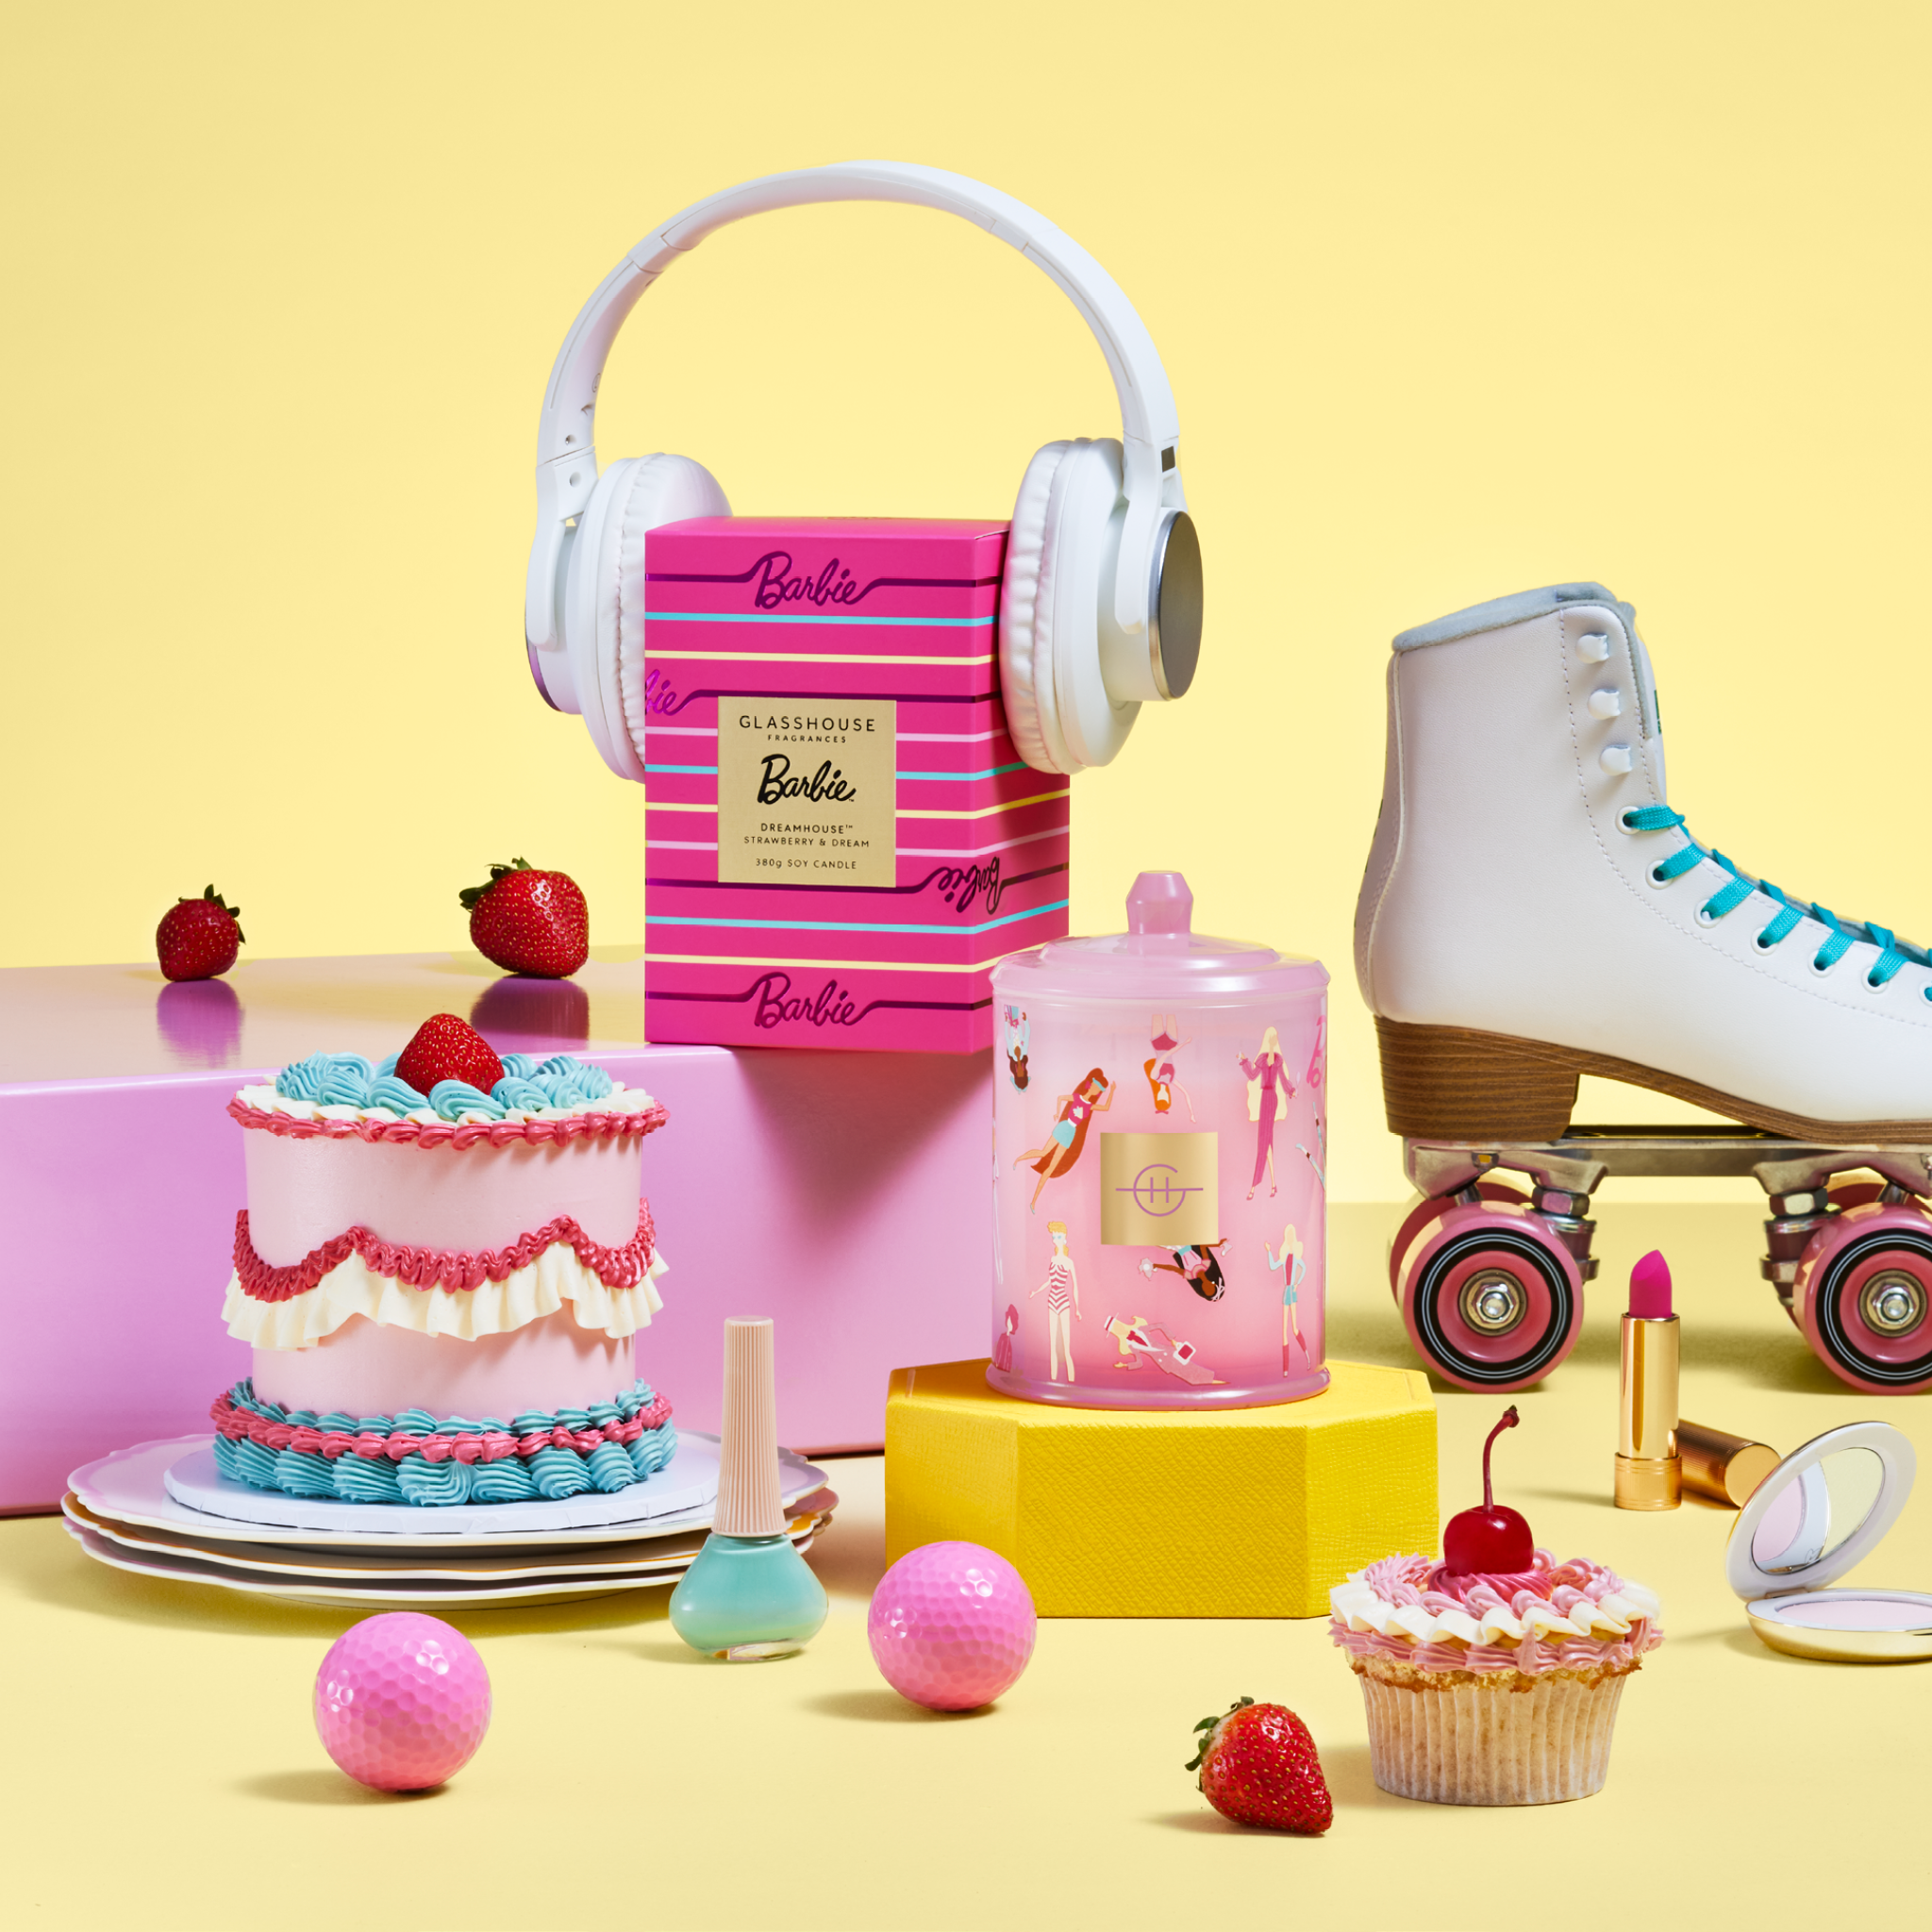 Glasshouse Fragrances Barbie™ Dreamhouse™ 380g candle, headphones, cake & roller skates